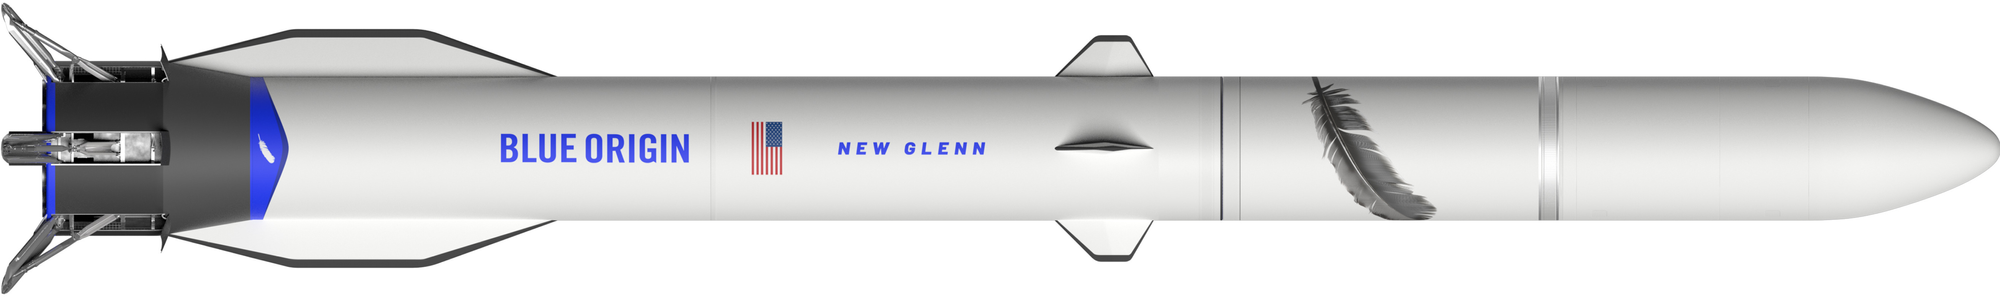 A render of New Glenn with its landing legs deployed. ©Blue Origin